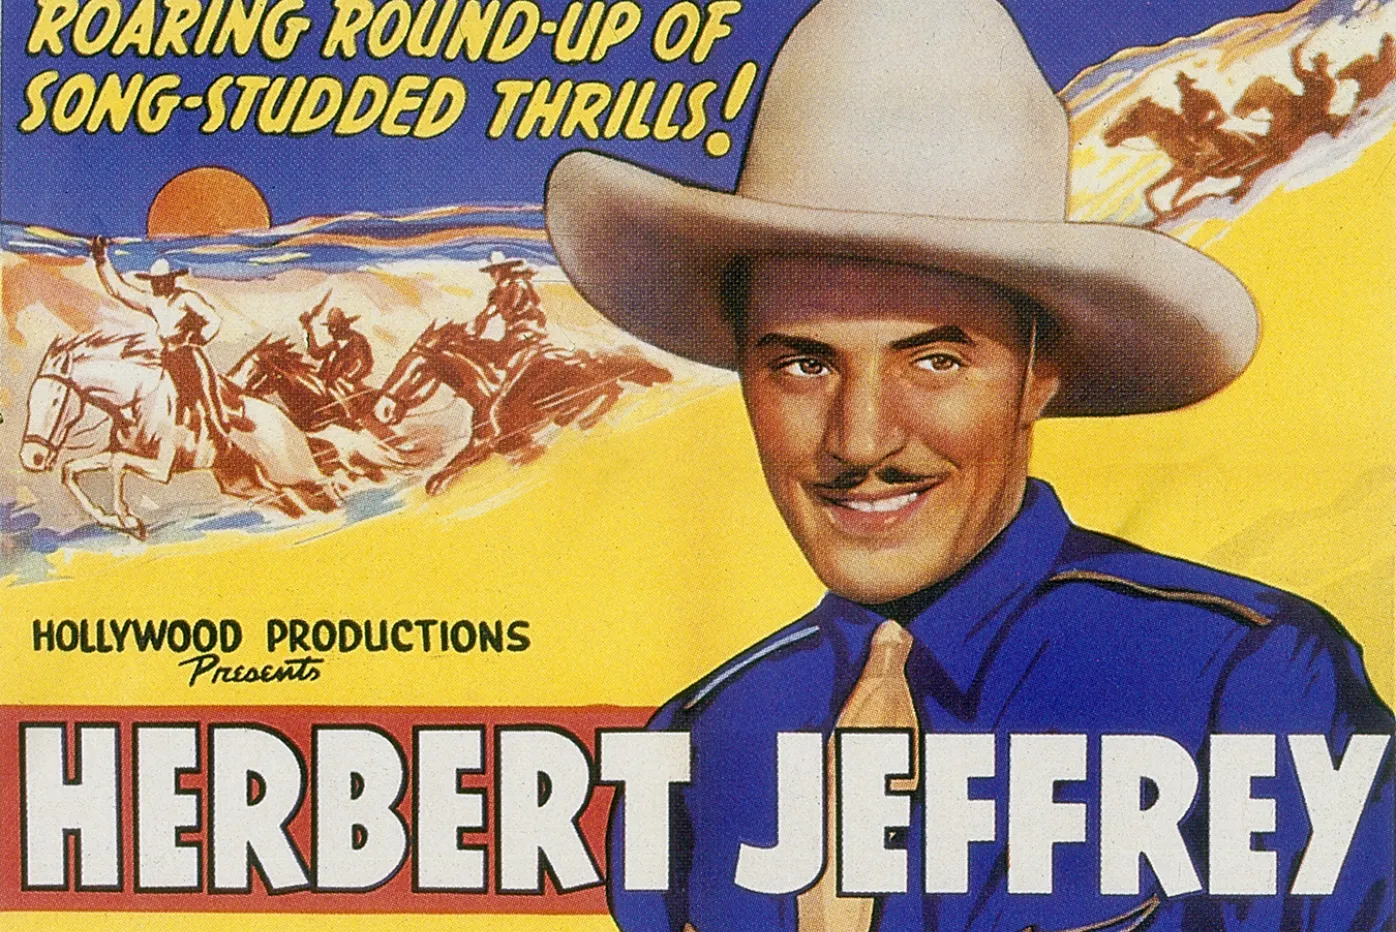 Roaring round-up of song-studded thrills! Herbert Jeffrey